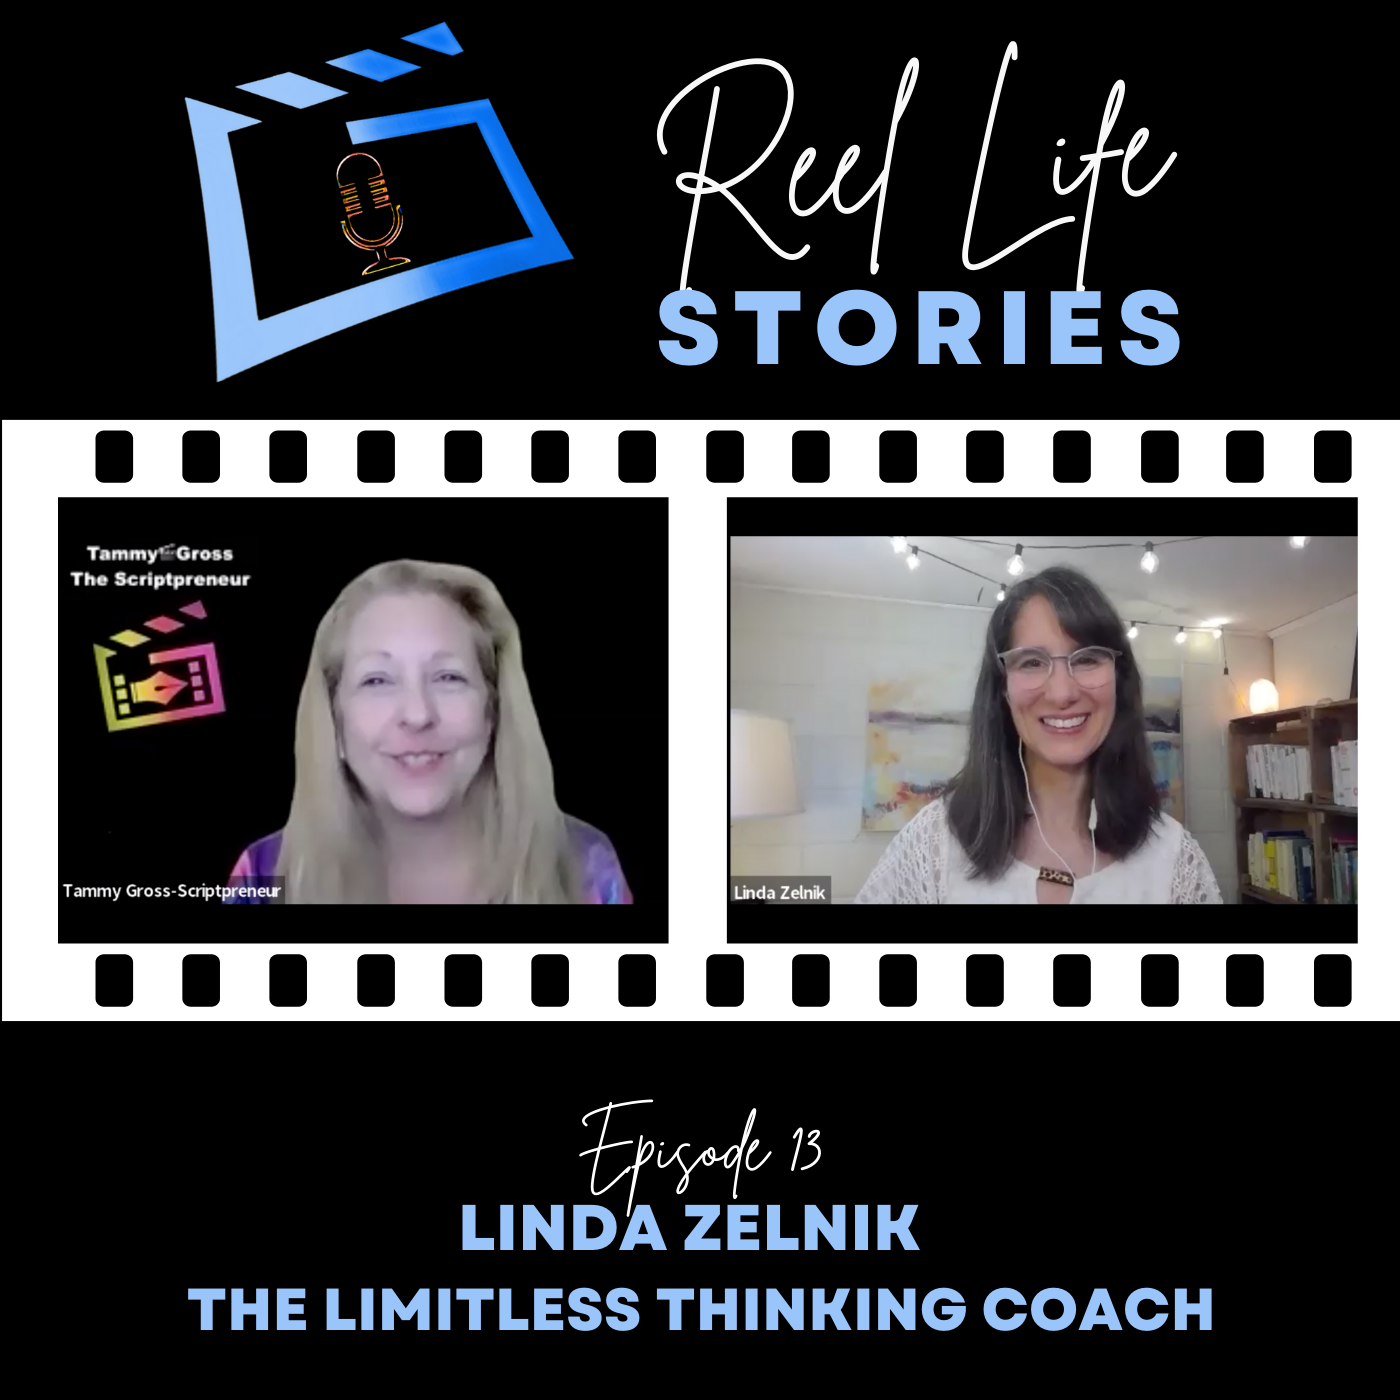 LINDA ZELNIK - The Limitless Thinking Coach